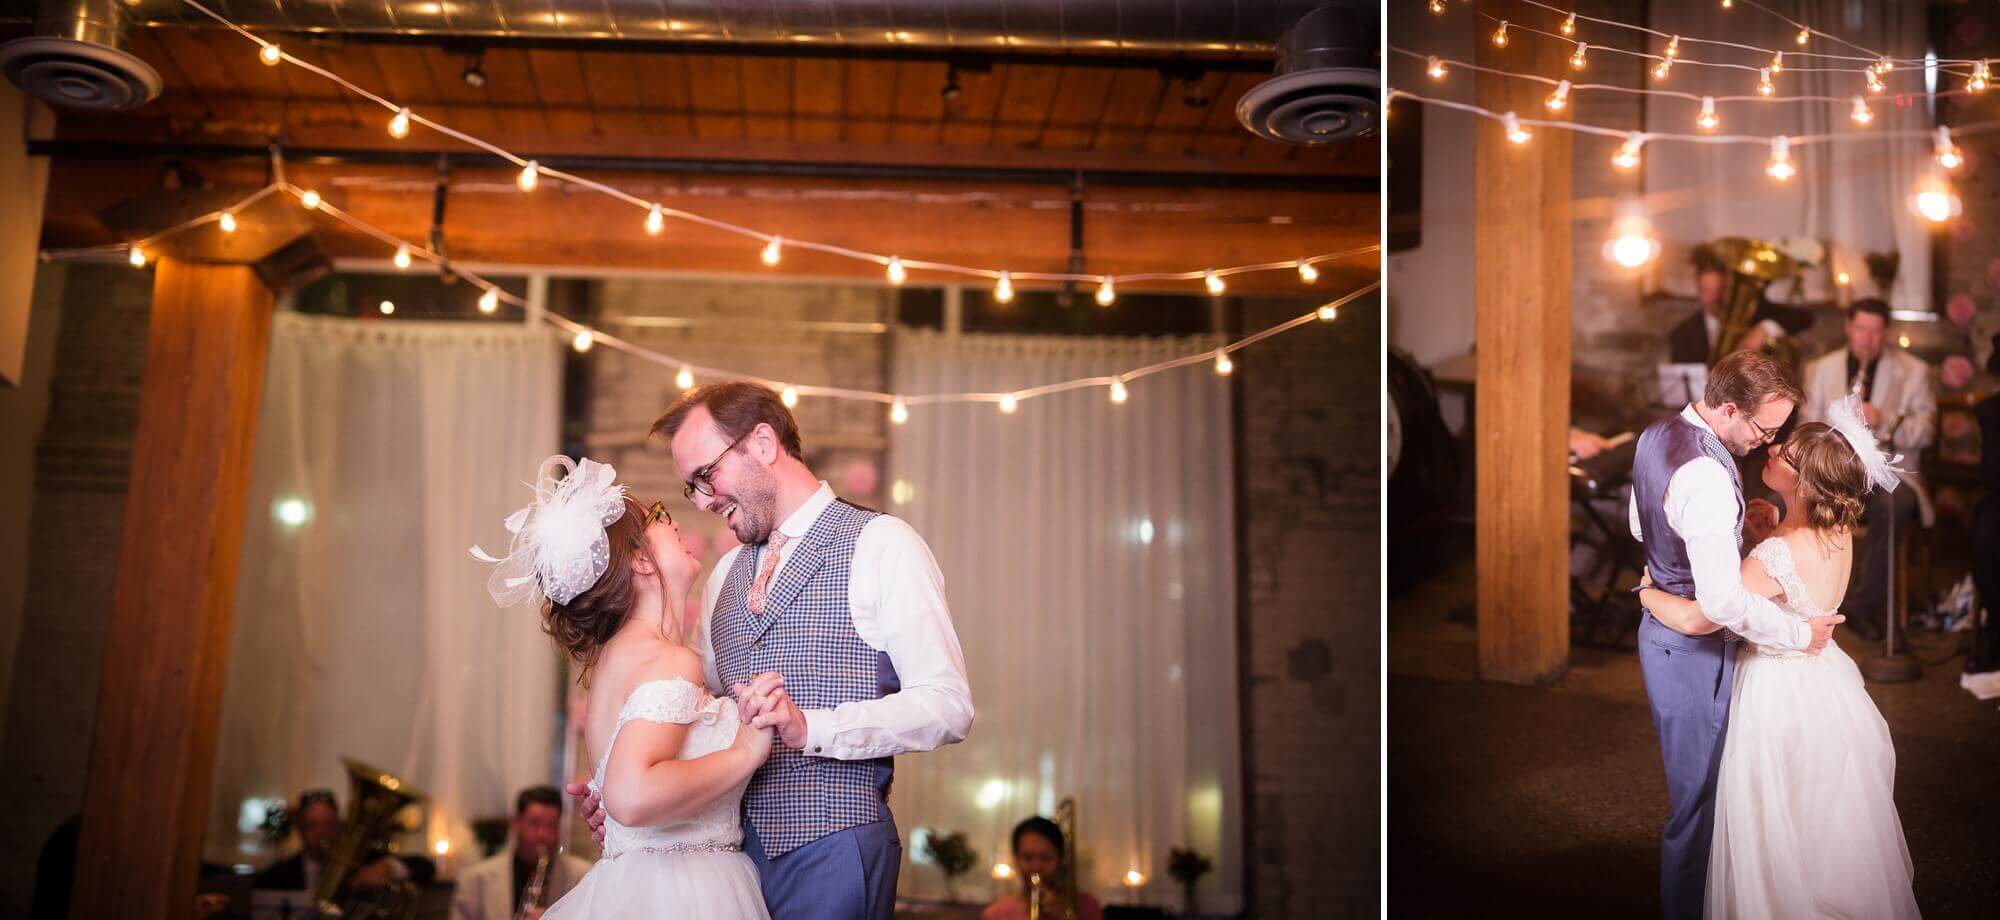 The bride and groom dance under string lights at Hotel Ocho, Toronto